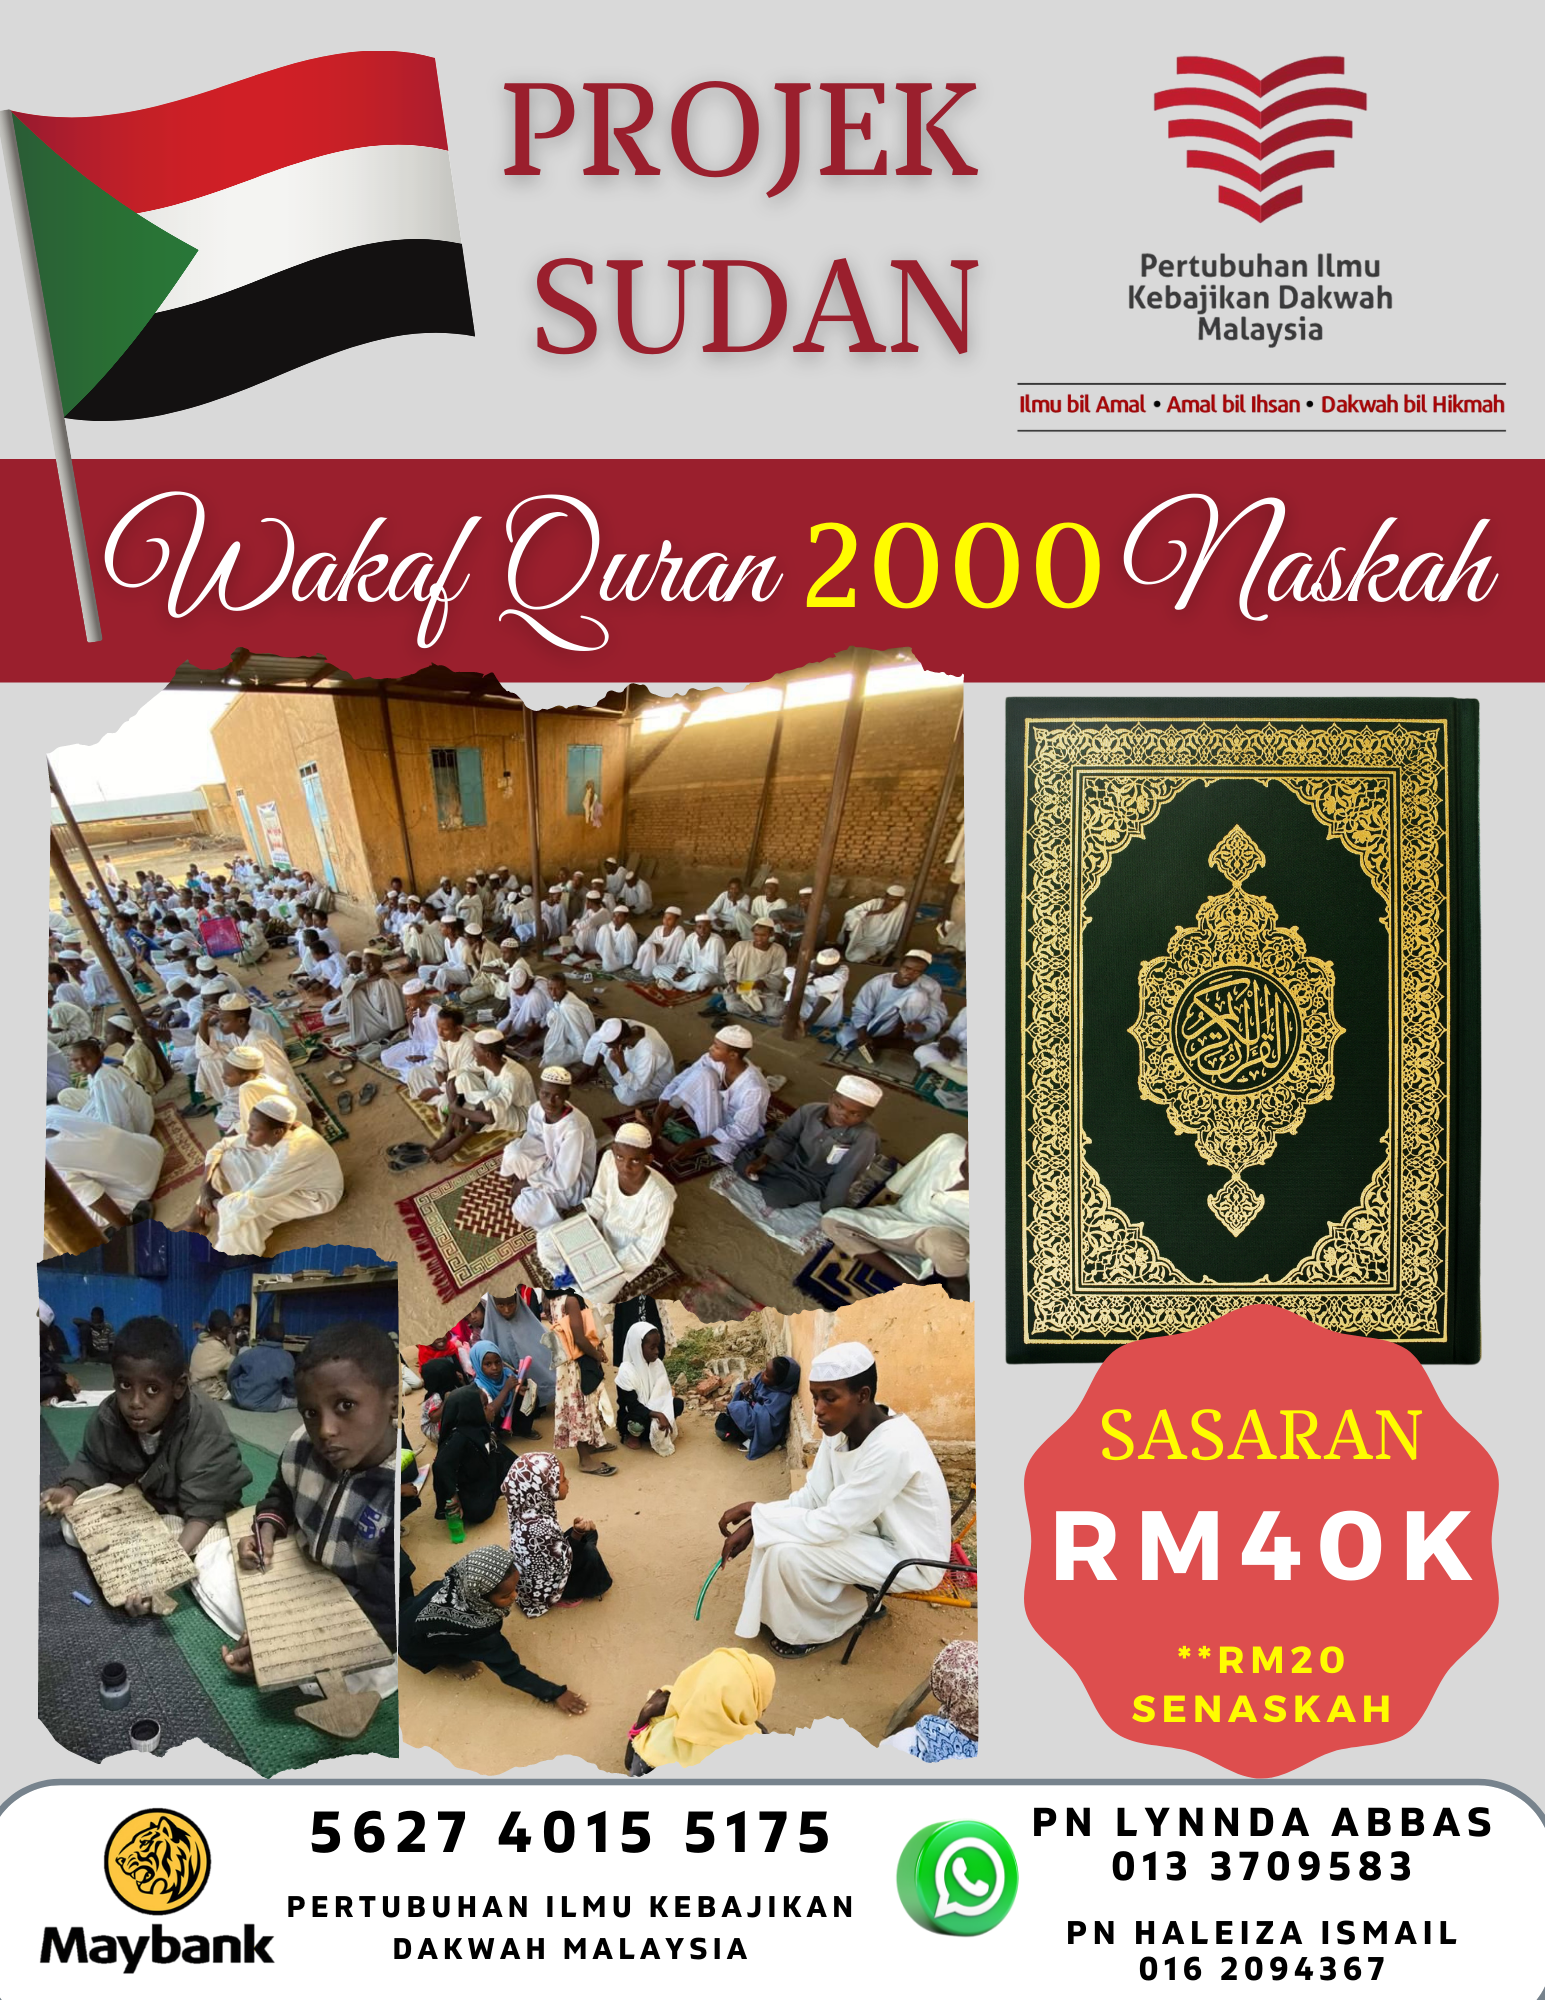 You are currently viewing Projek Sudan – Wakaf Quran 2000 Naskah